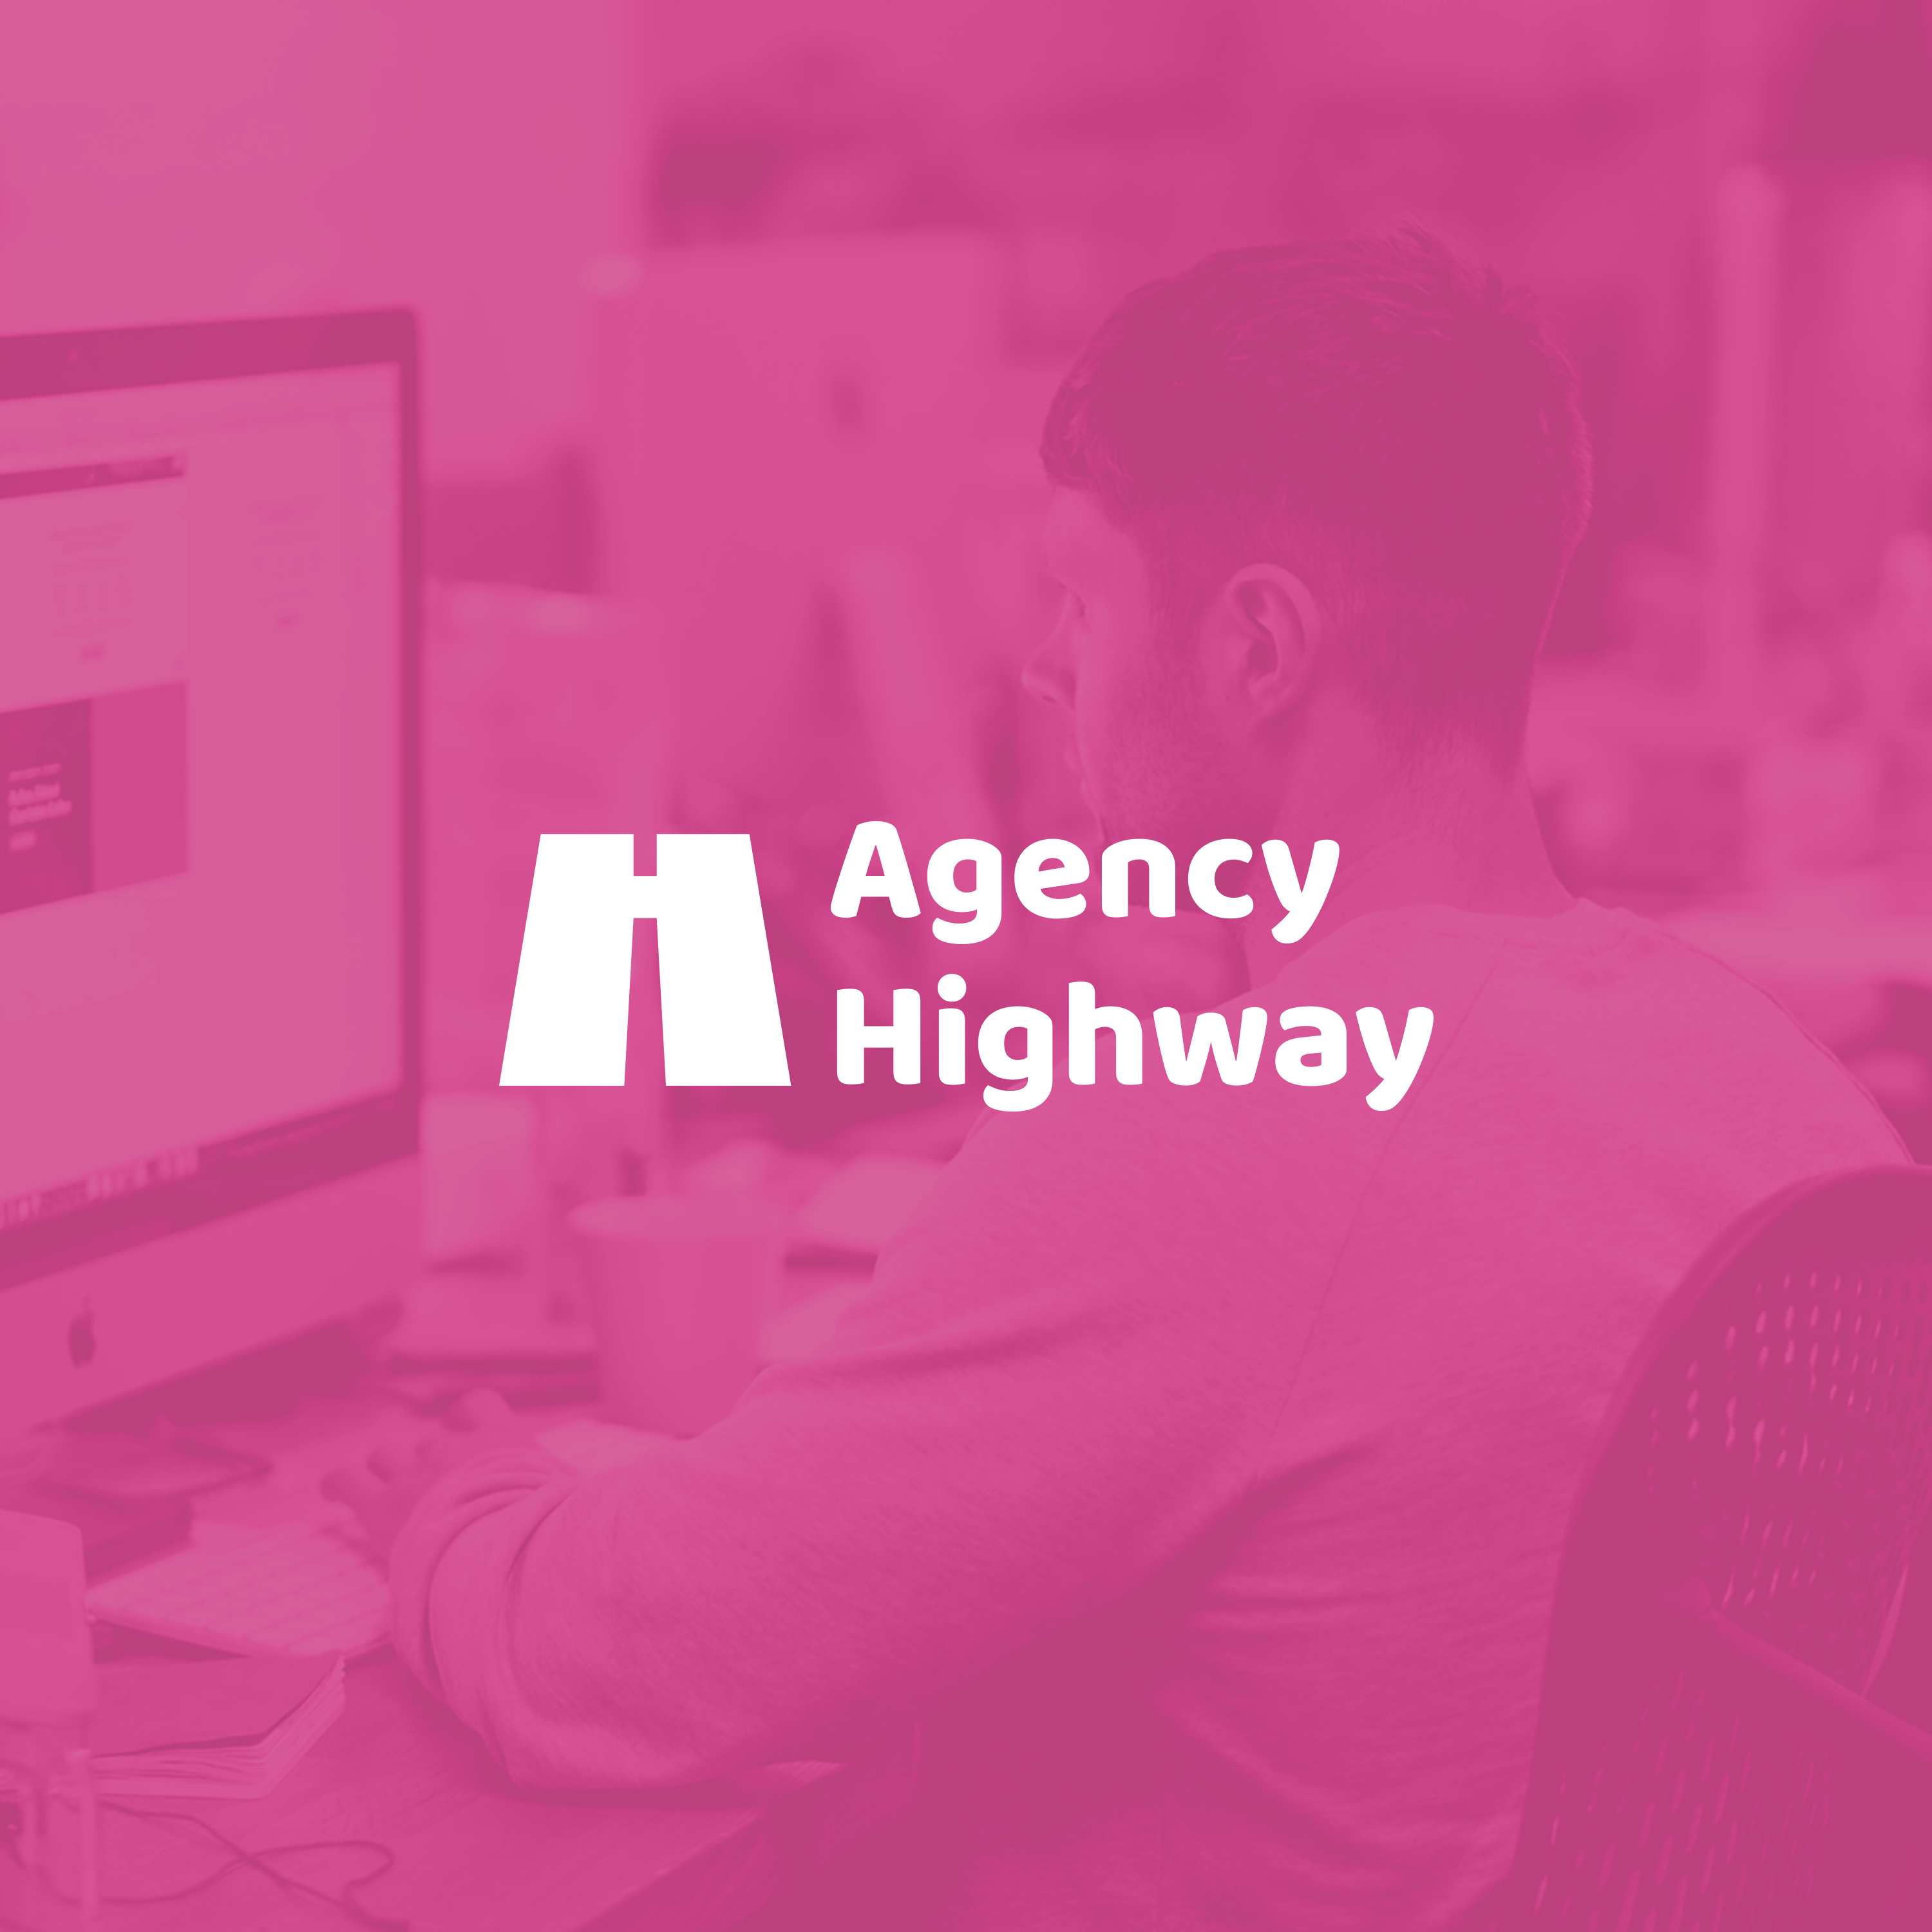 Agency Highway